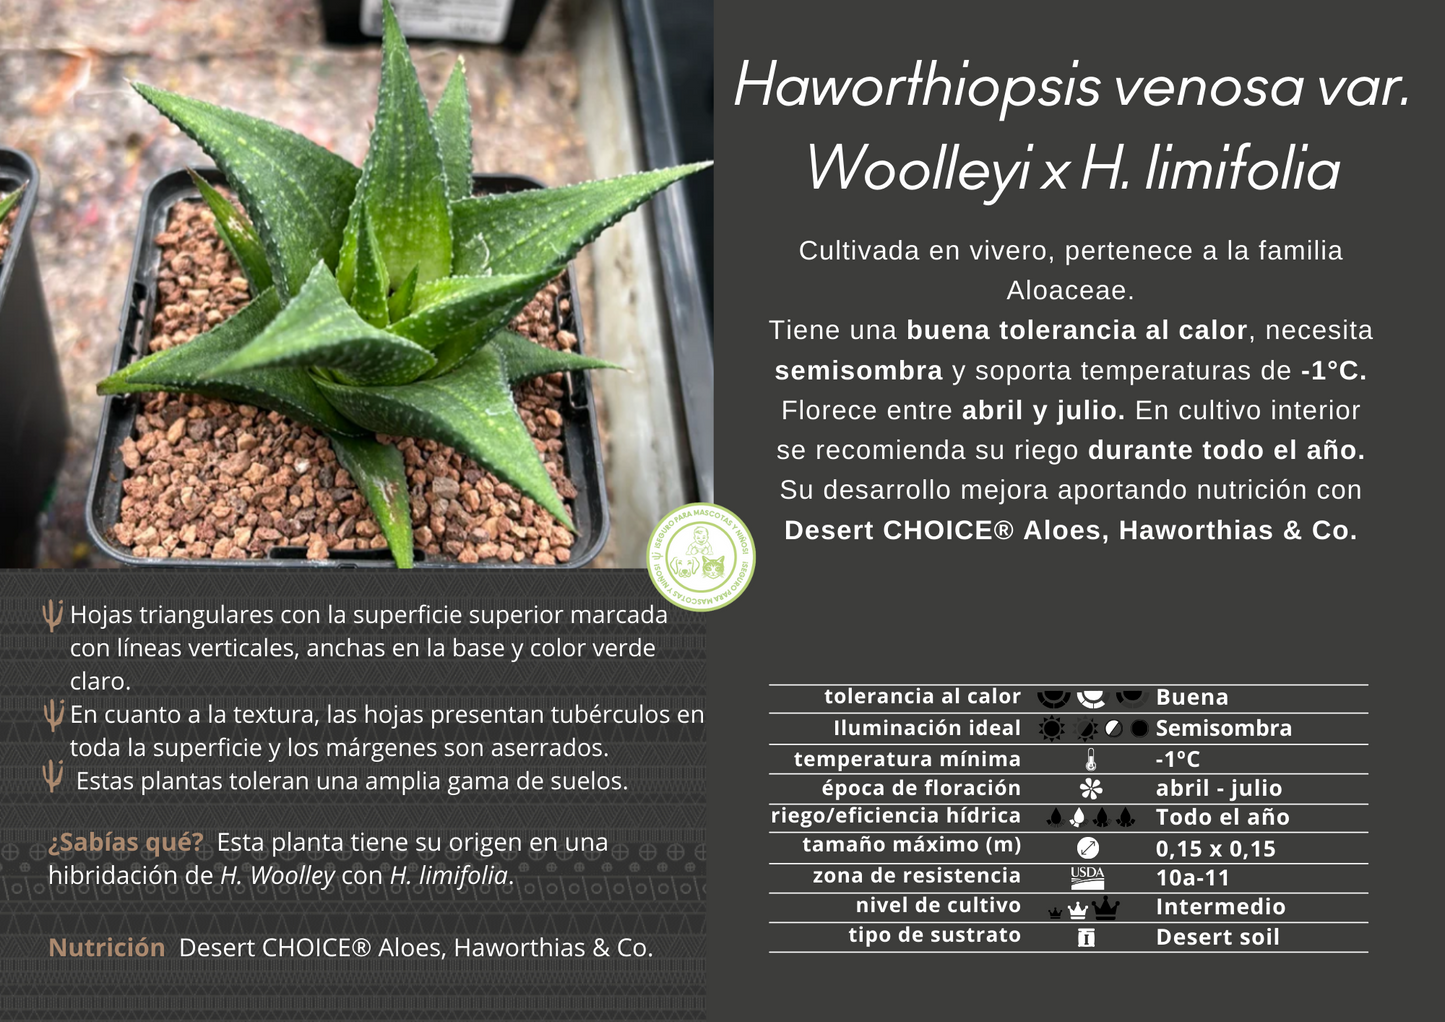 Haworthiopsis venosa var. Woolleyi x H. limifolia